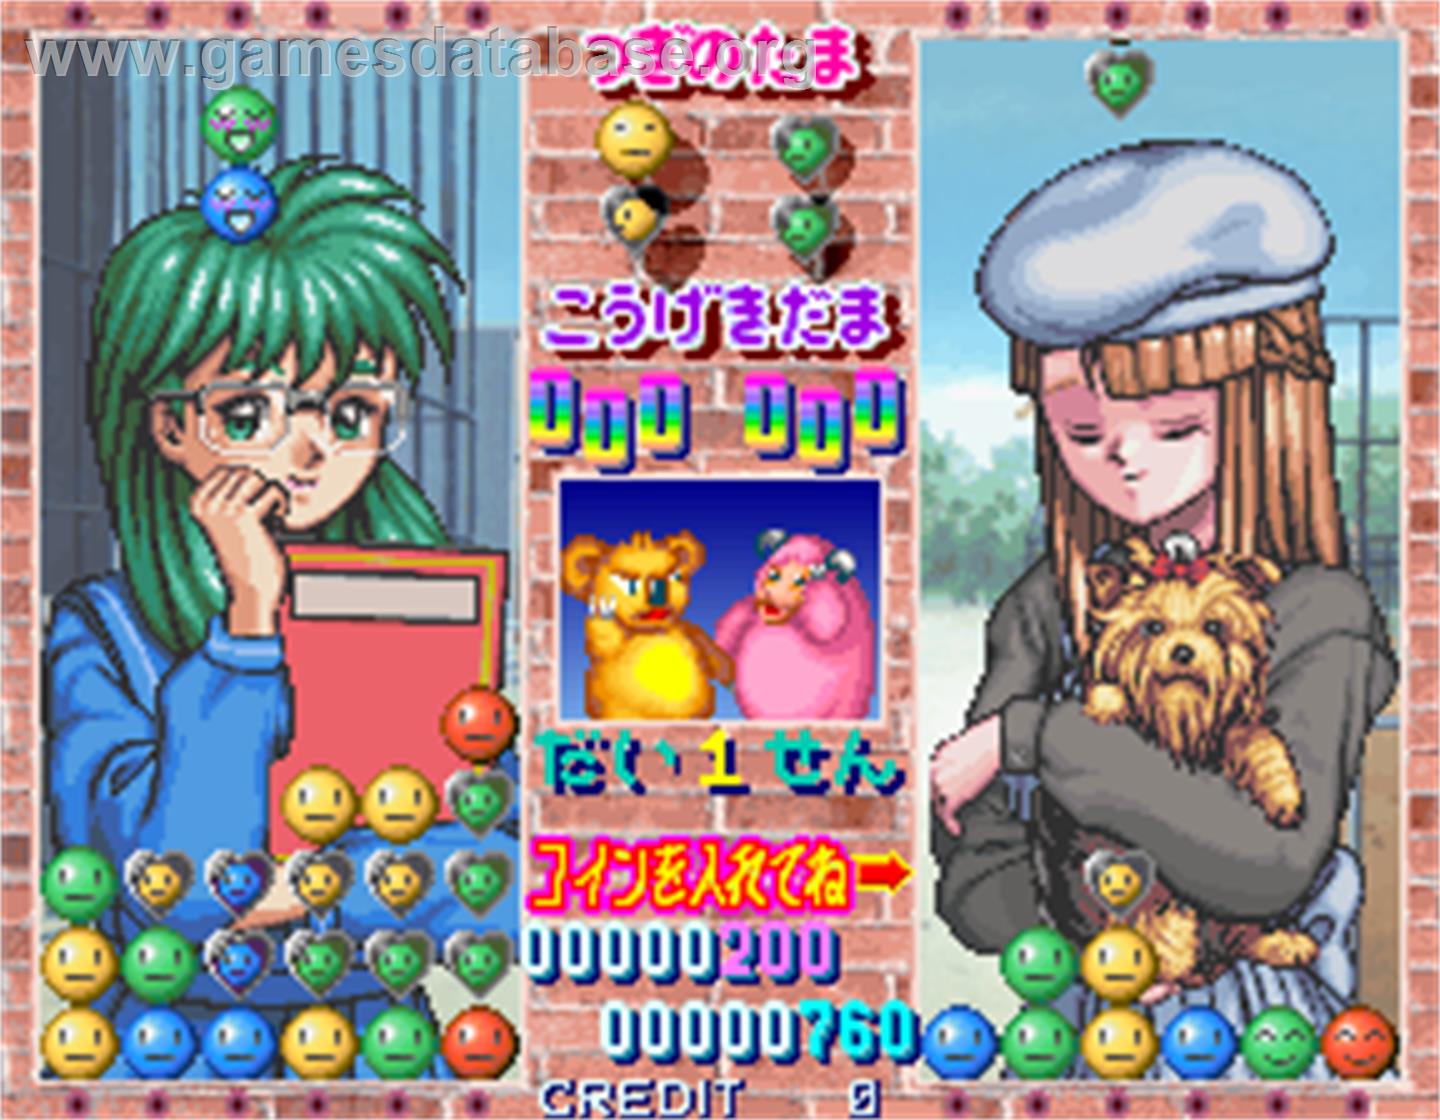 Tokimeki Memorial Taisen Puzzle-dama - Arcade - Artwork - In Game